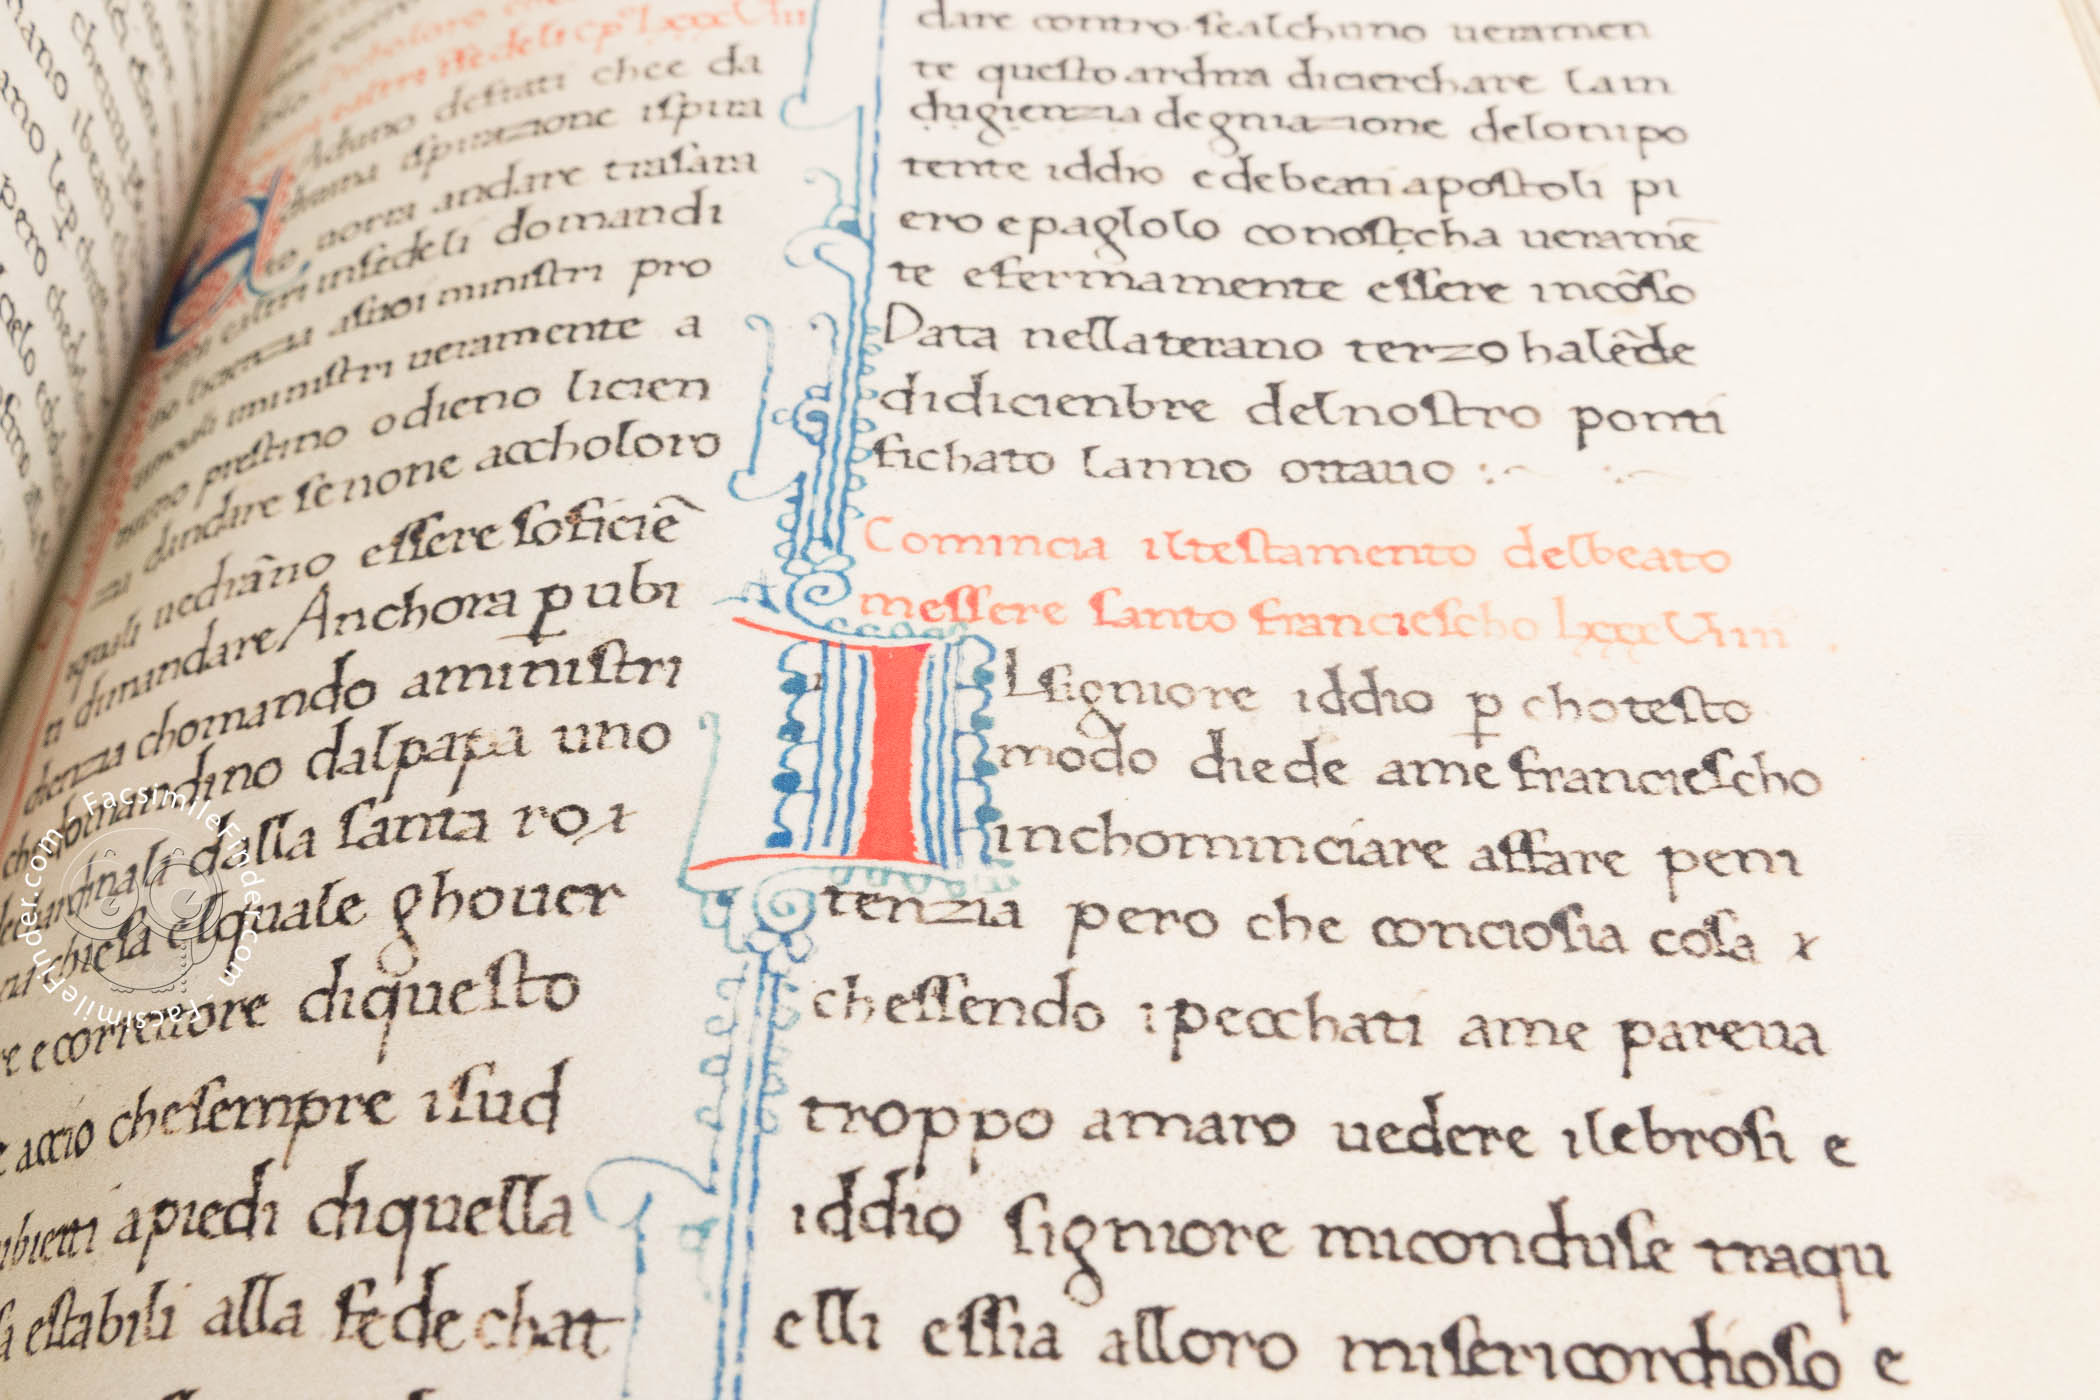 Life And Writings Of Saint Francis Of Assisi Facsimile Edition - 